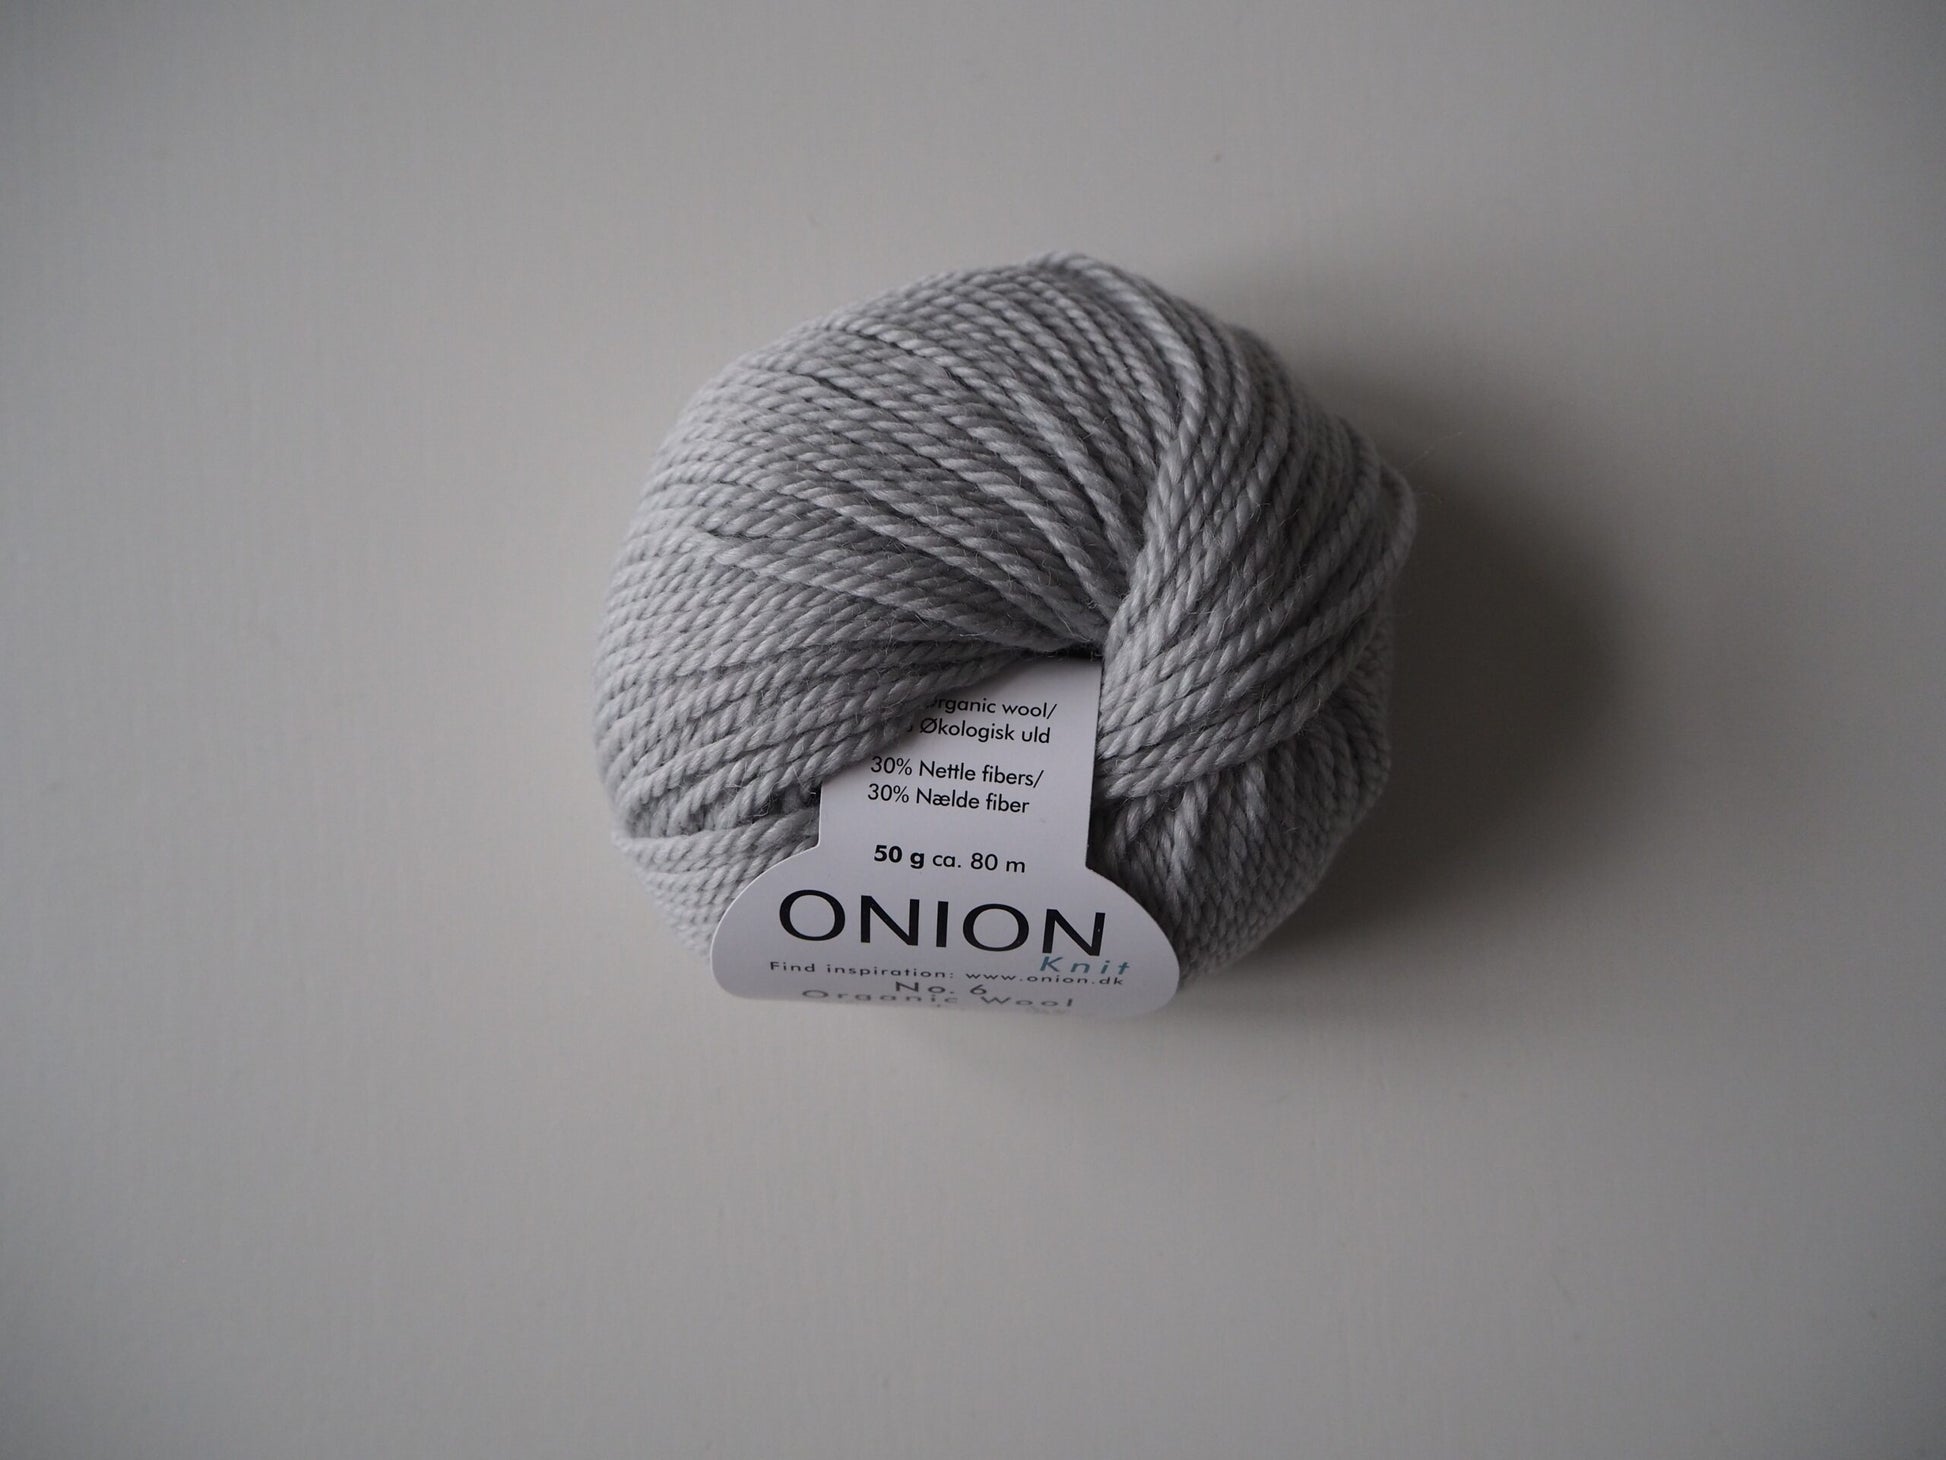 Onion No. 6 Organic Wool + Nettles 622 Lys Grå